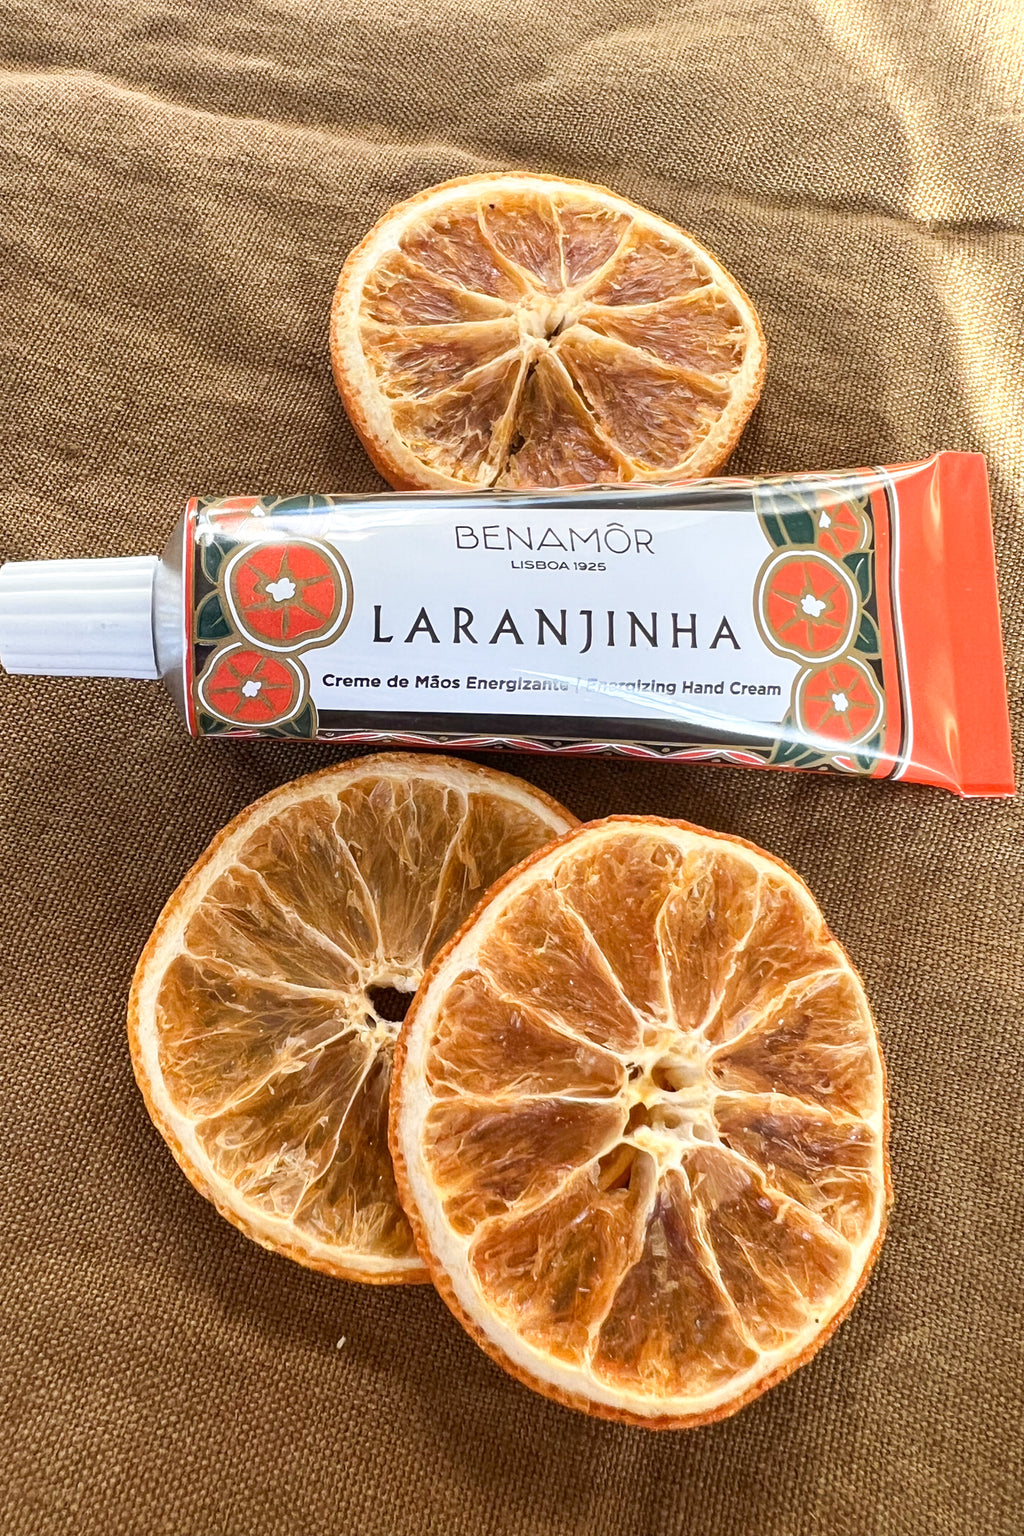 Benamôr Laranjinha (Orange) Energizing Hand Cream - The Mercantile London